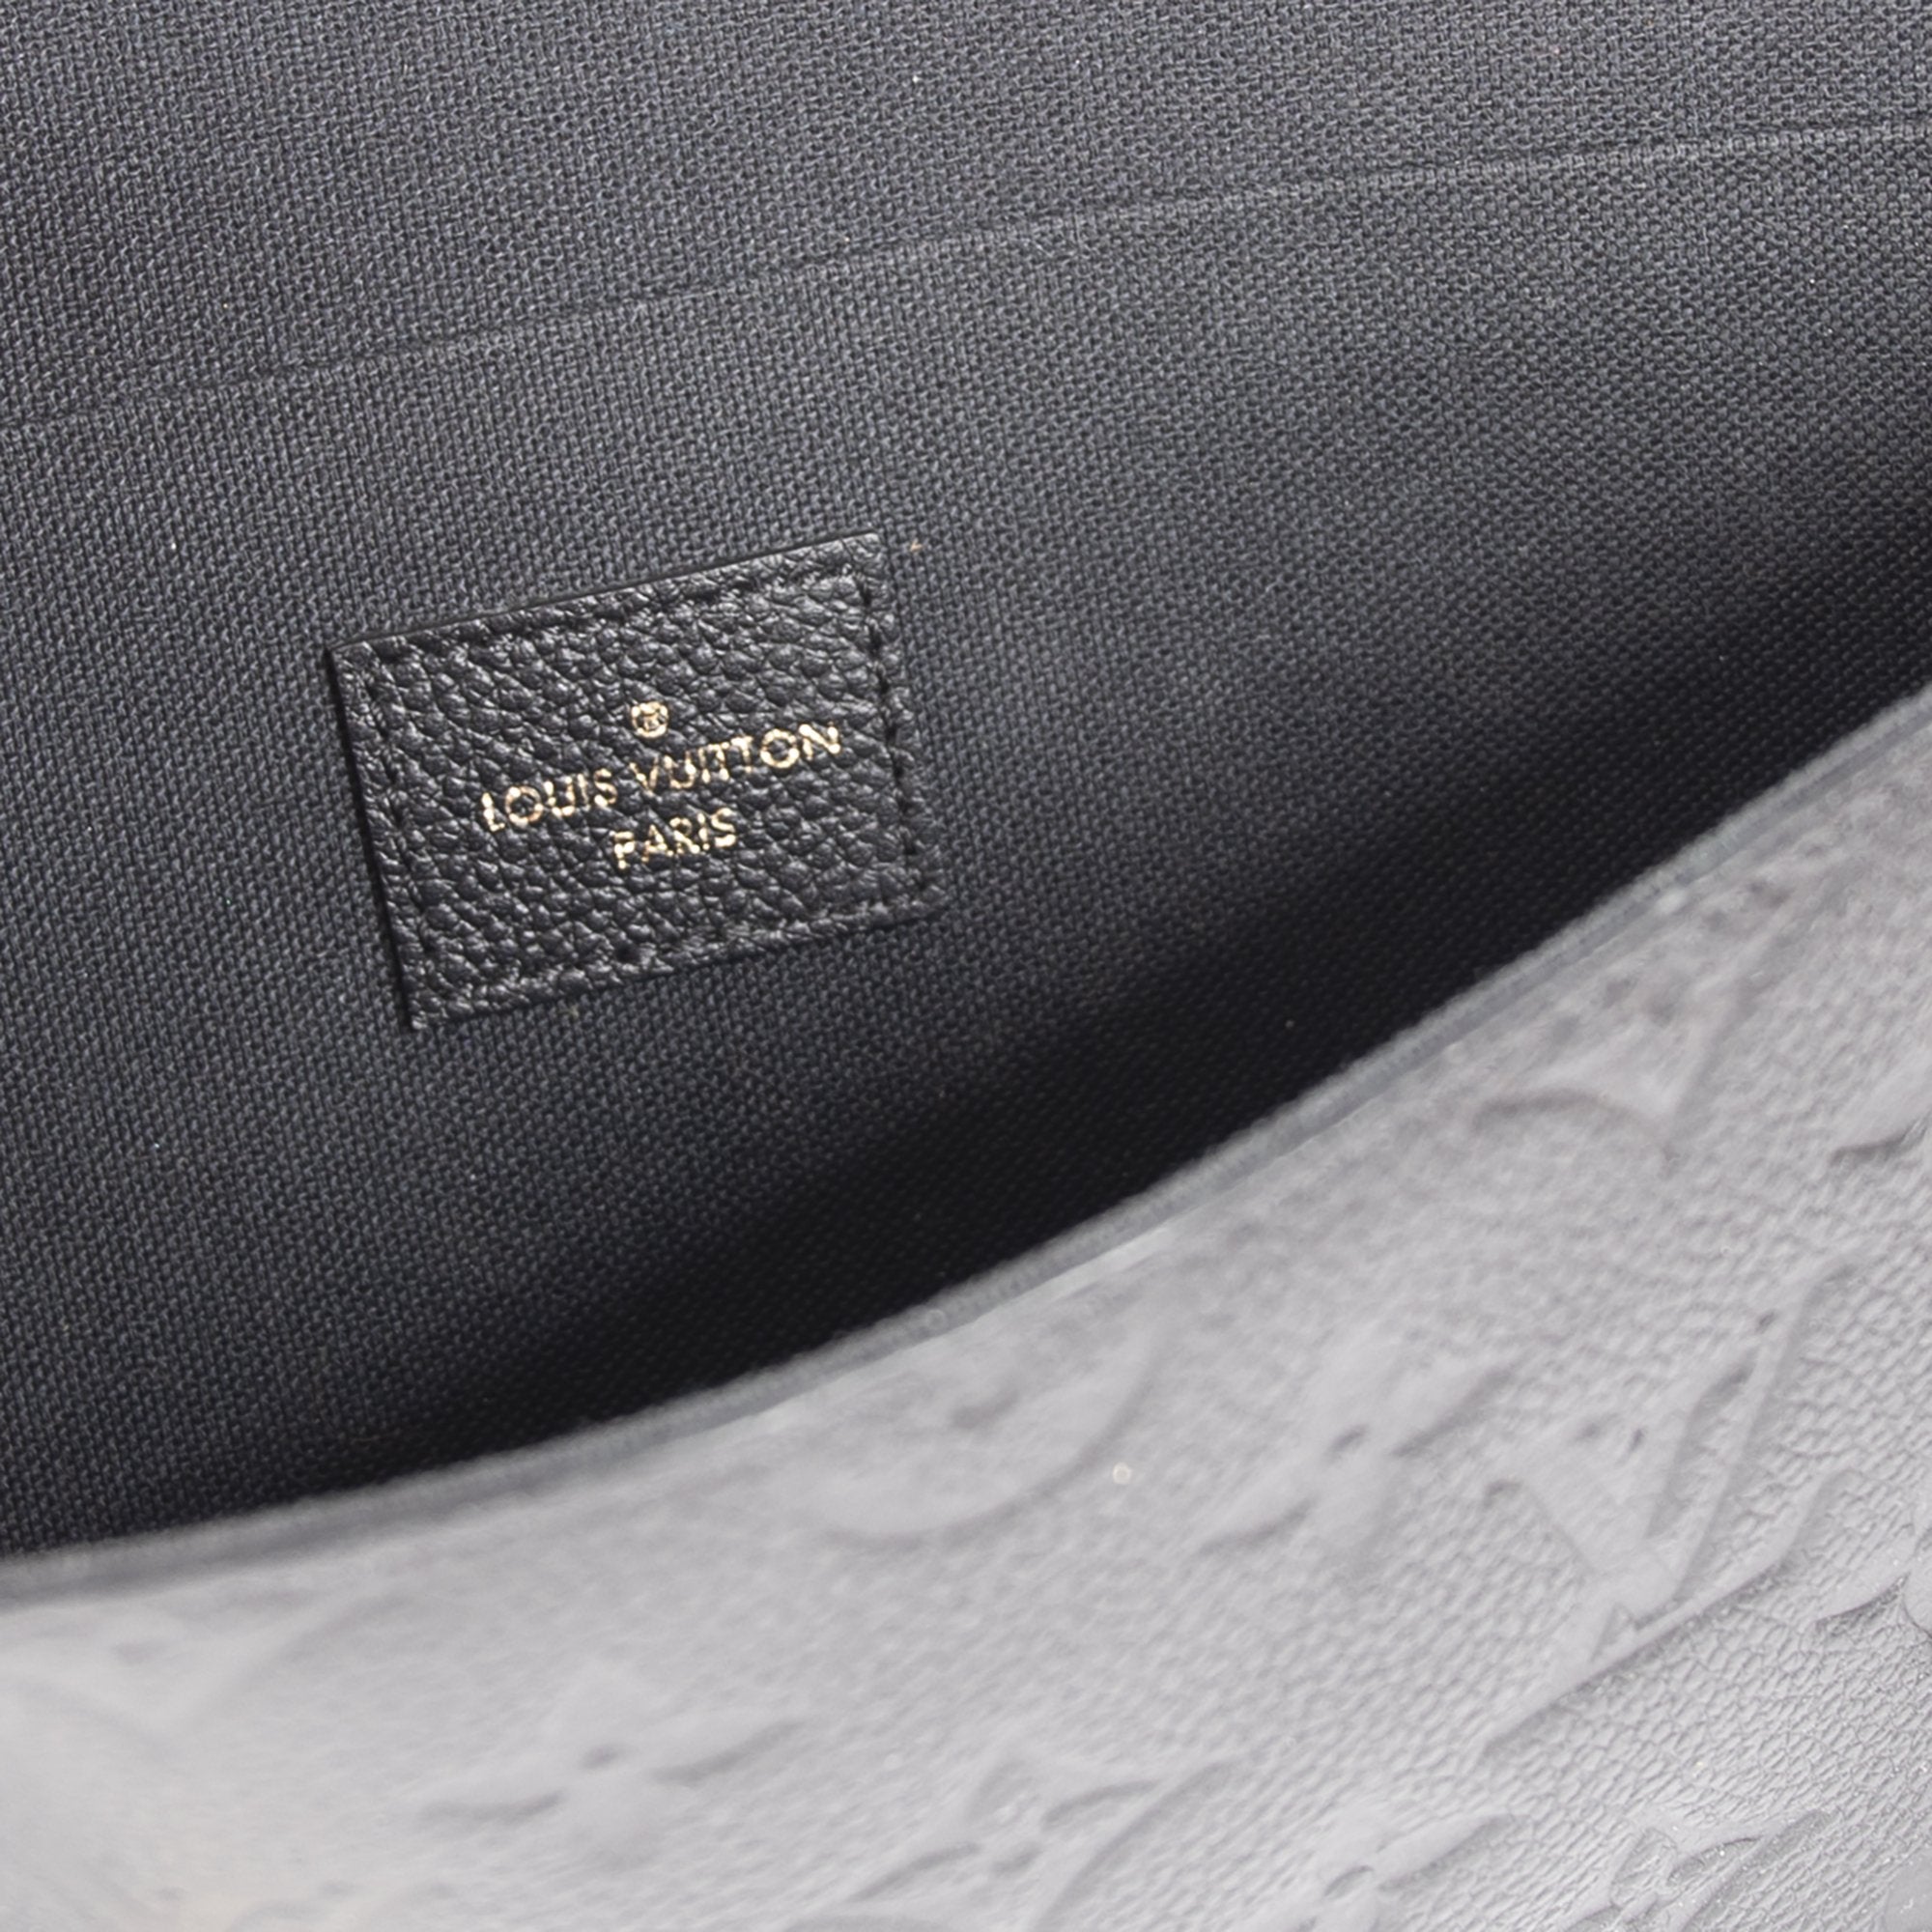 Félicie Pochette Monogram Empreinte Leather in Black - Small Leather Goods  M80482, …